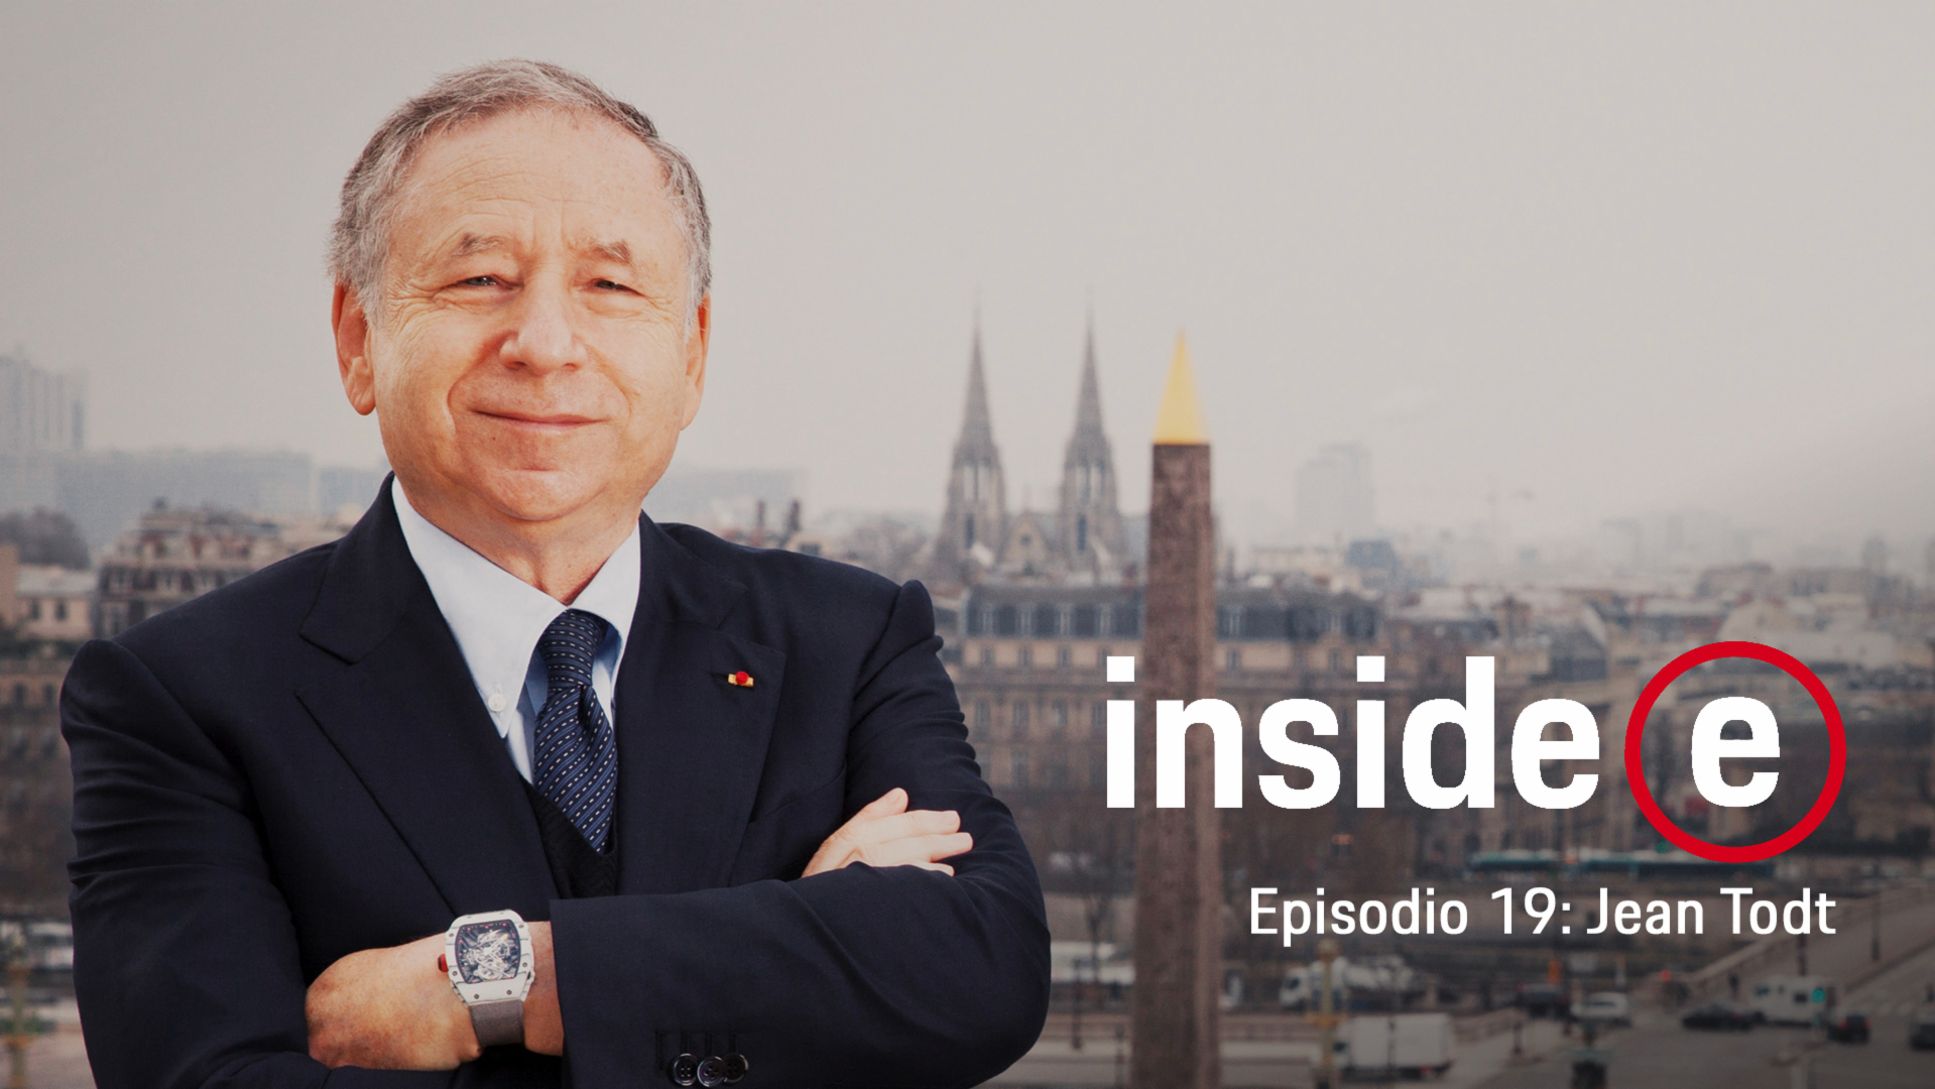 Jean Todt, Presidente de la FIA, podcast “Inside E”, 2021, Porsche AG